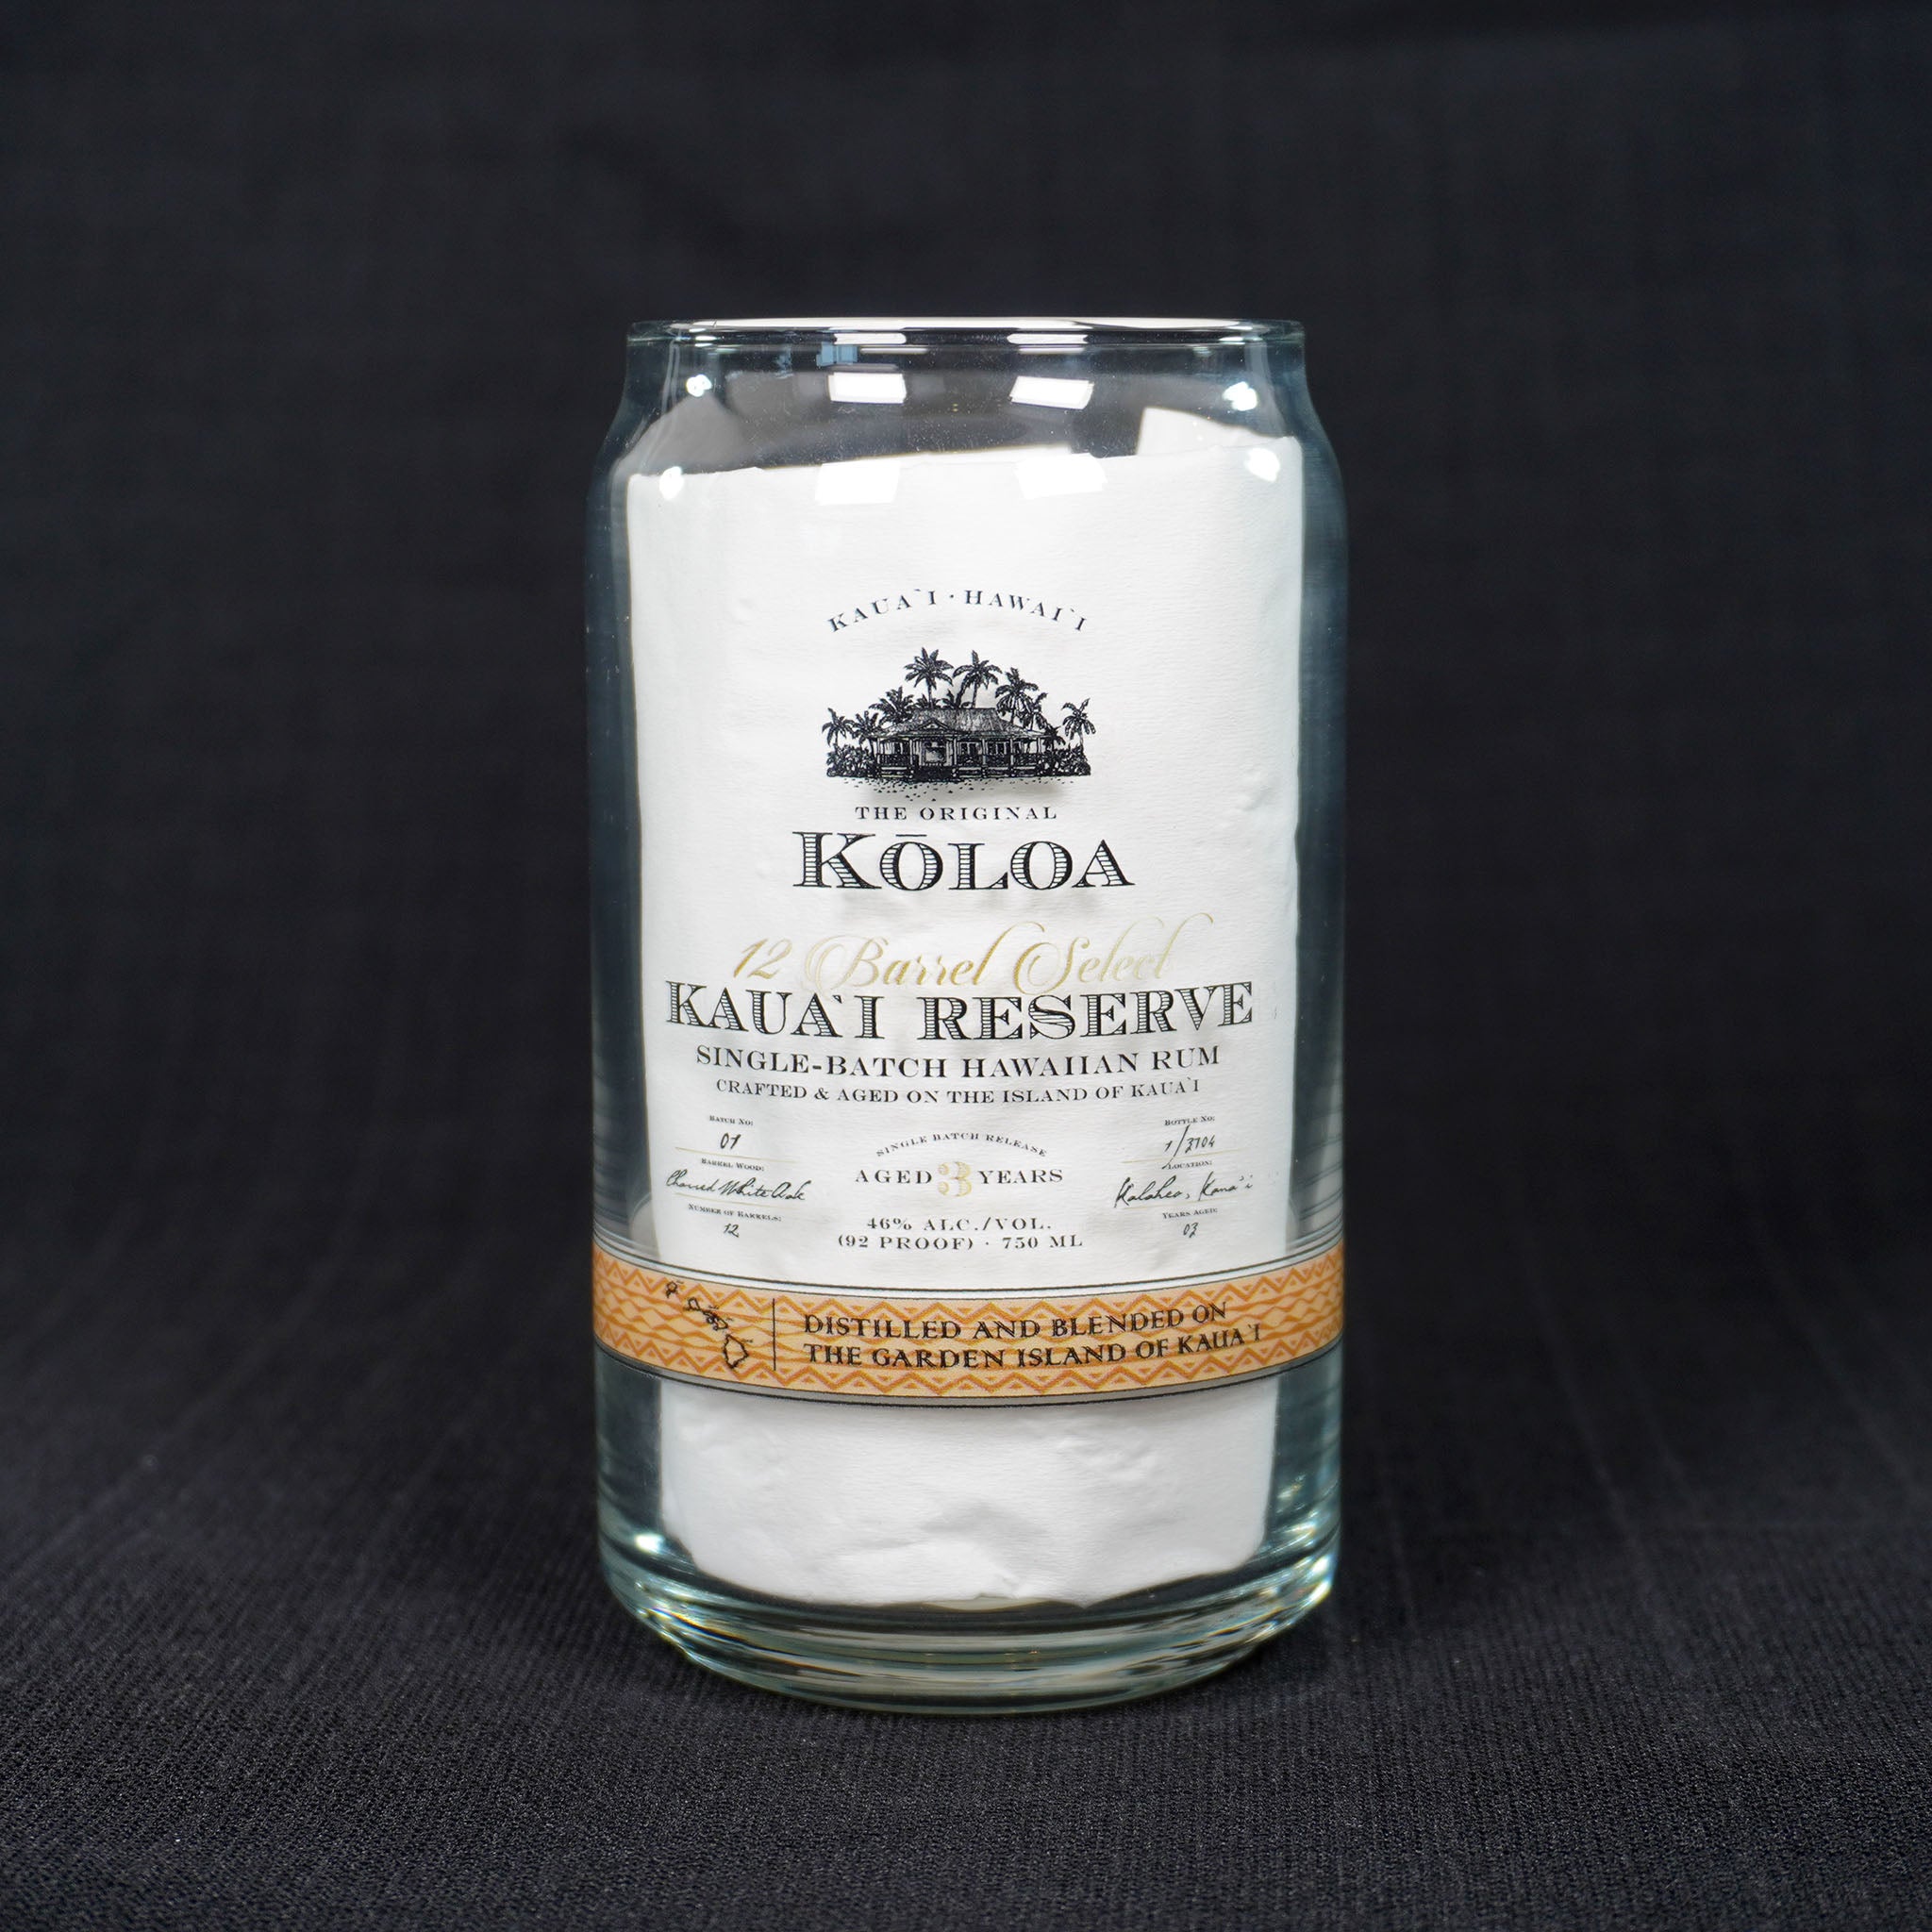 GlassCan-Aged Rum